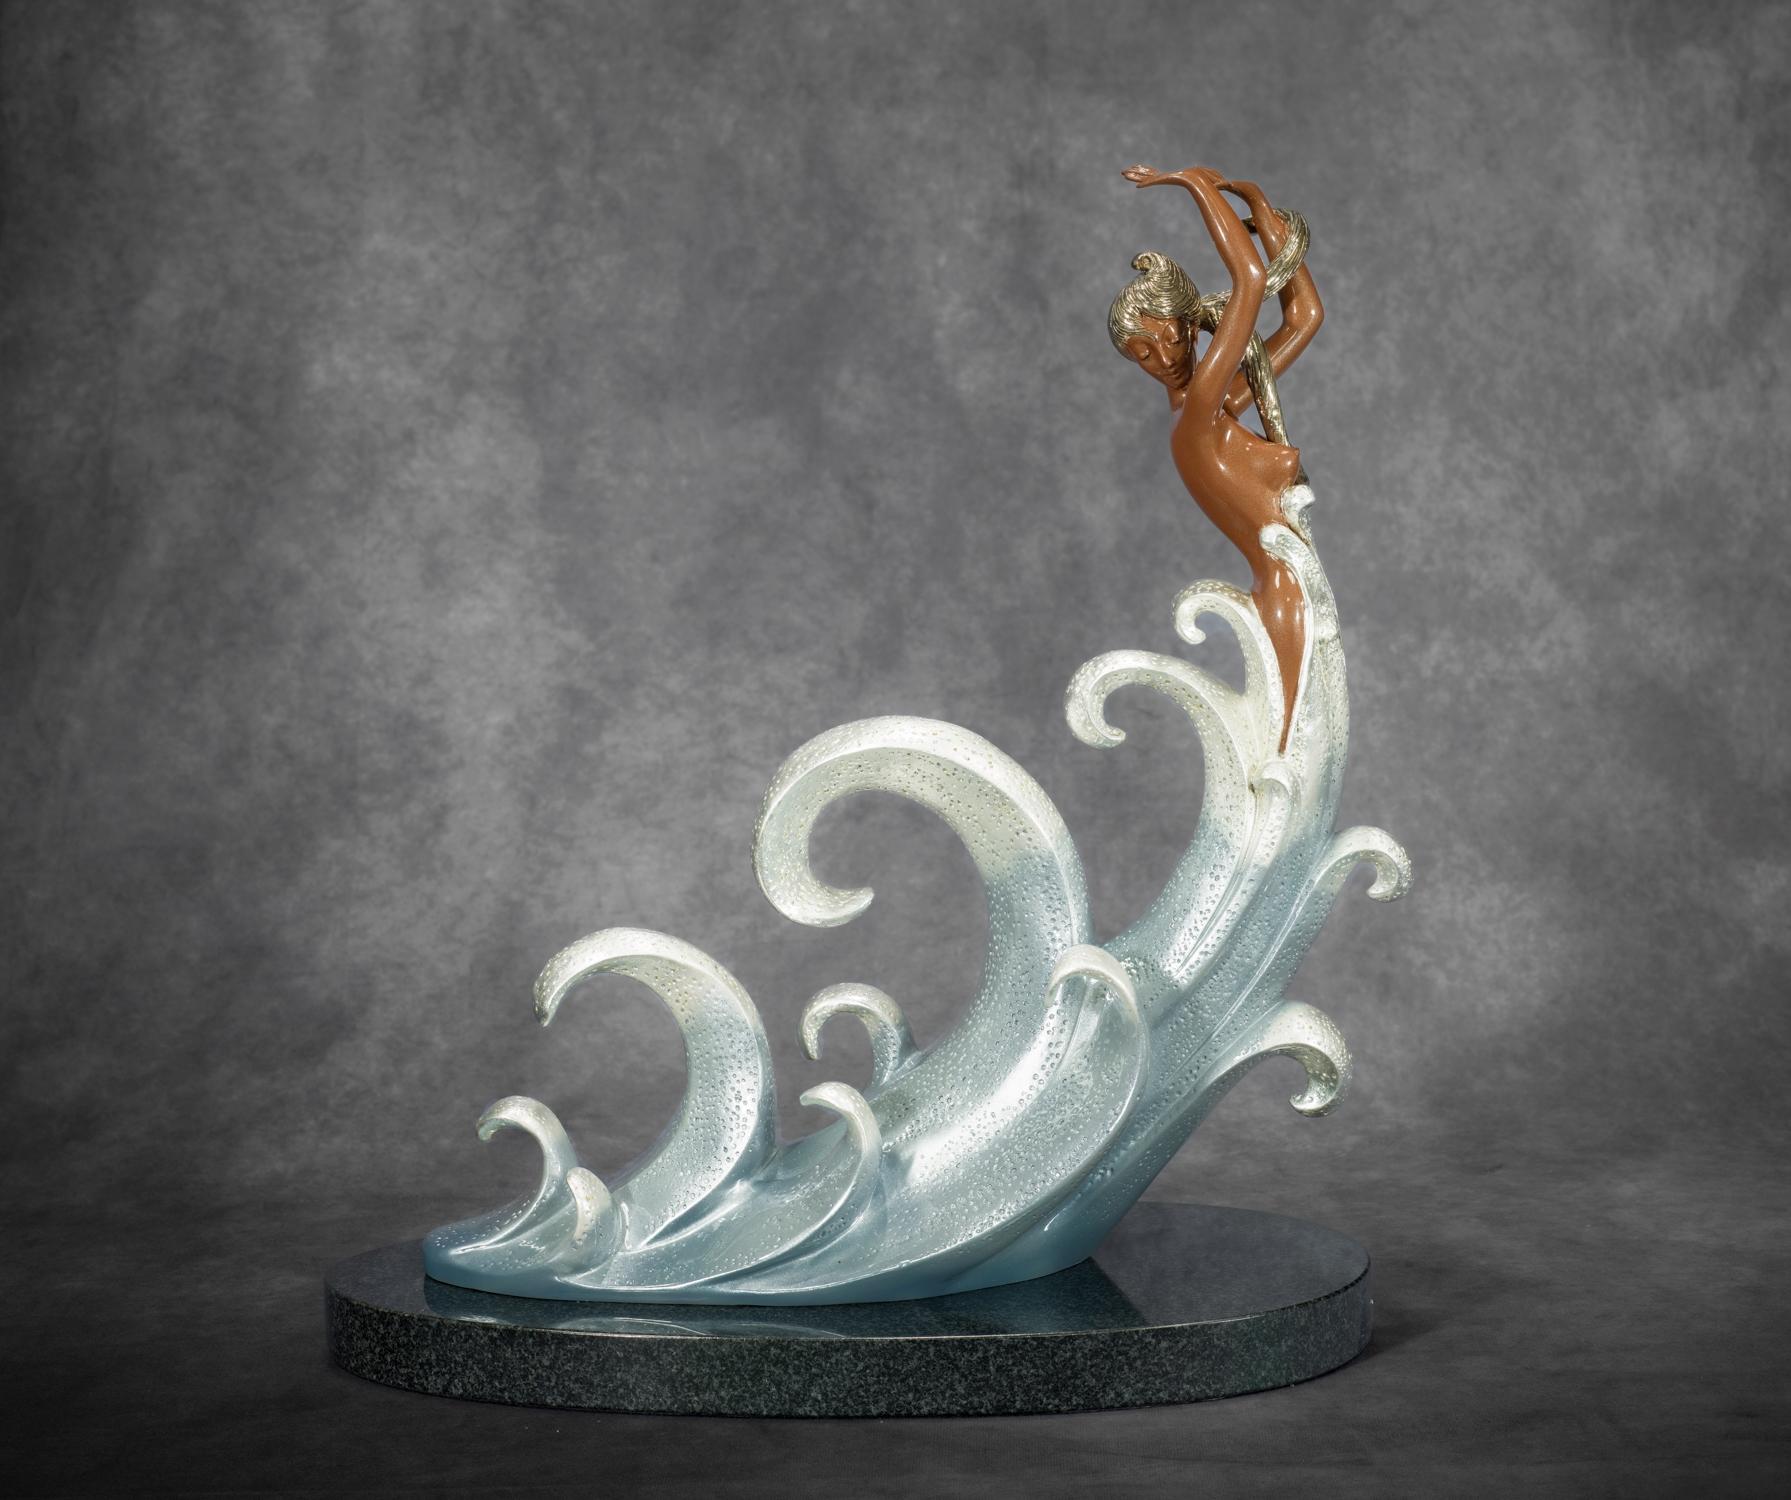 Erté Figurative Sculpture - The Wave